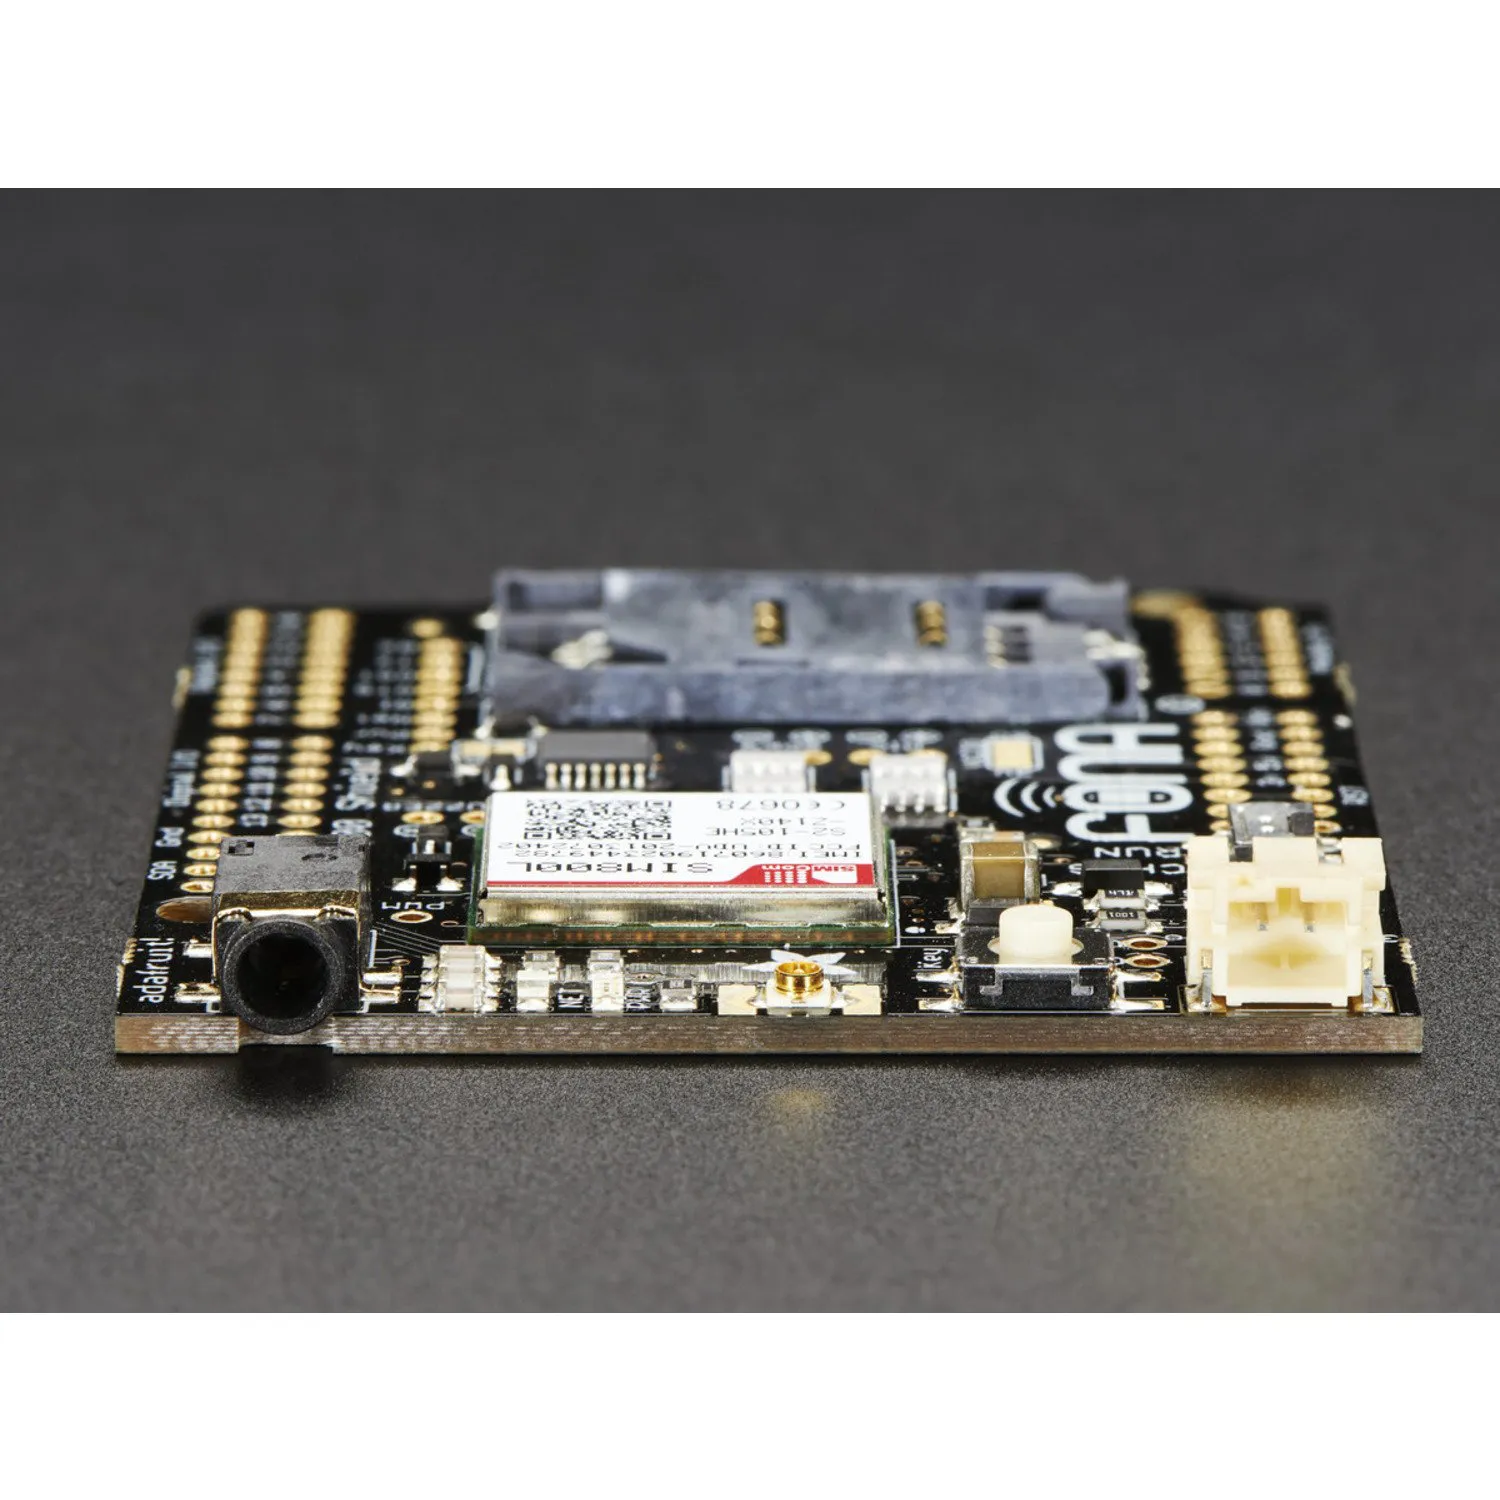 Photo of Adafruit FONA 800 Shield - Voice/Data Cellular GSM for Arduino